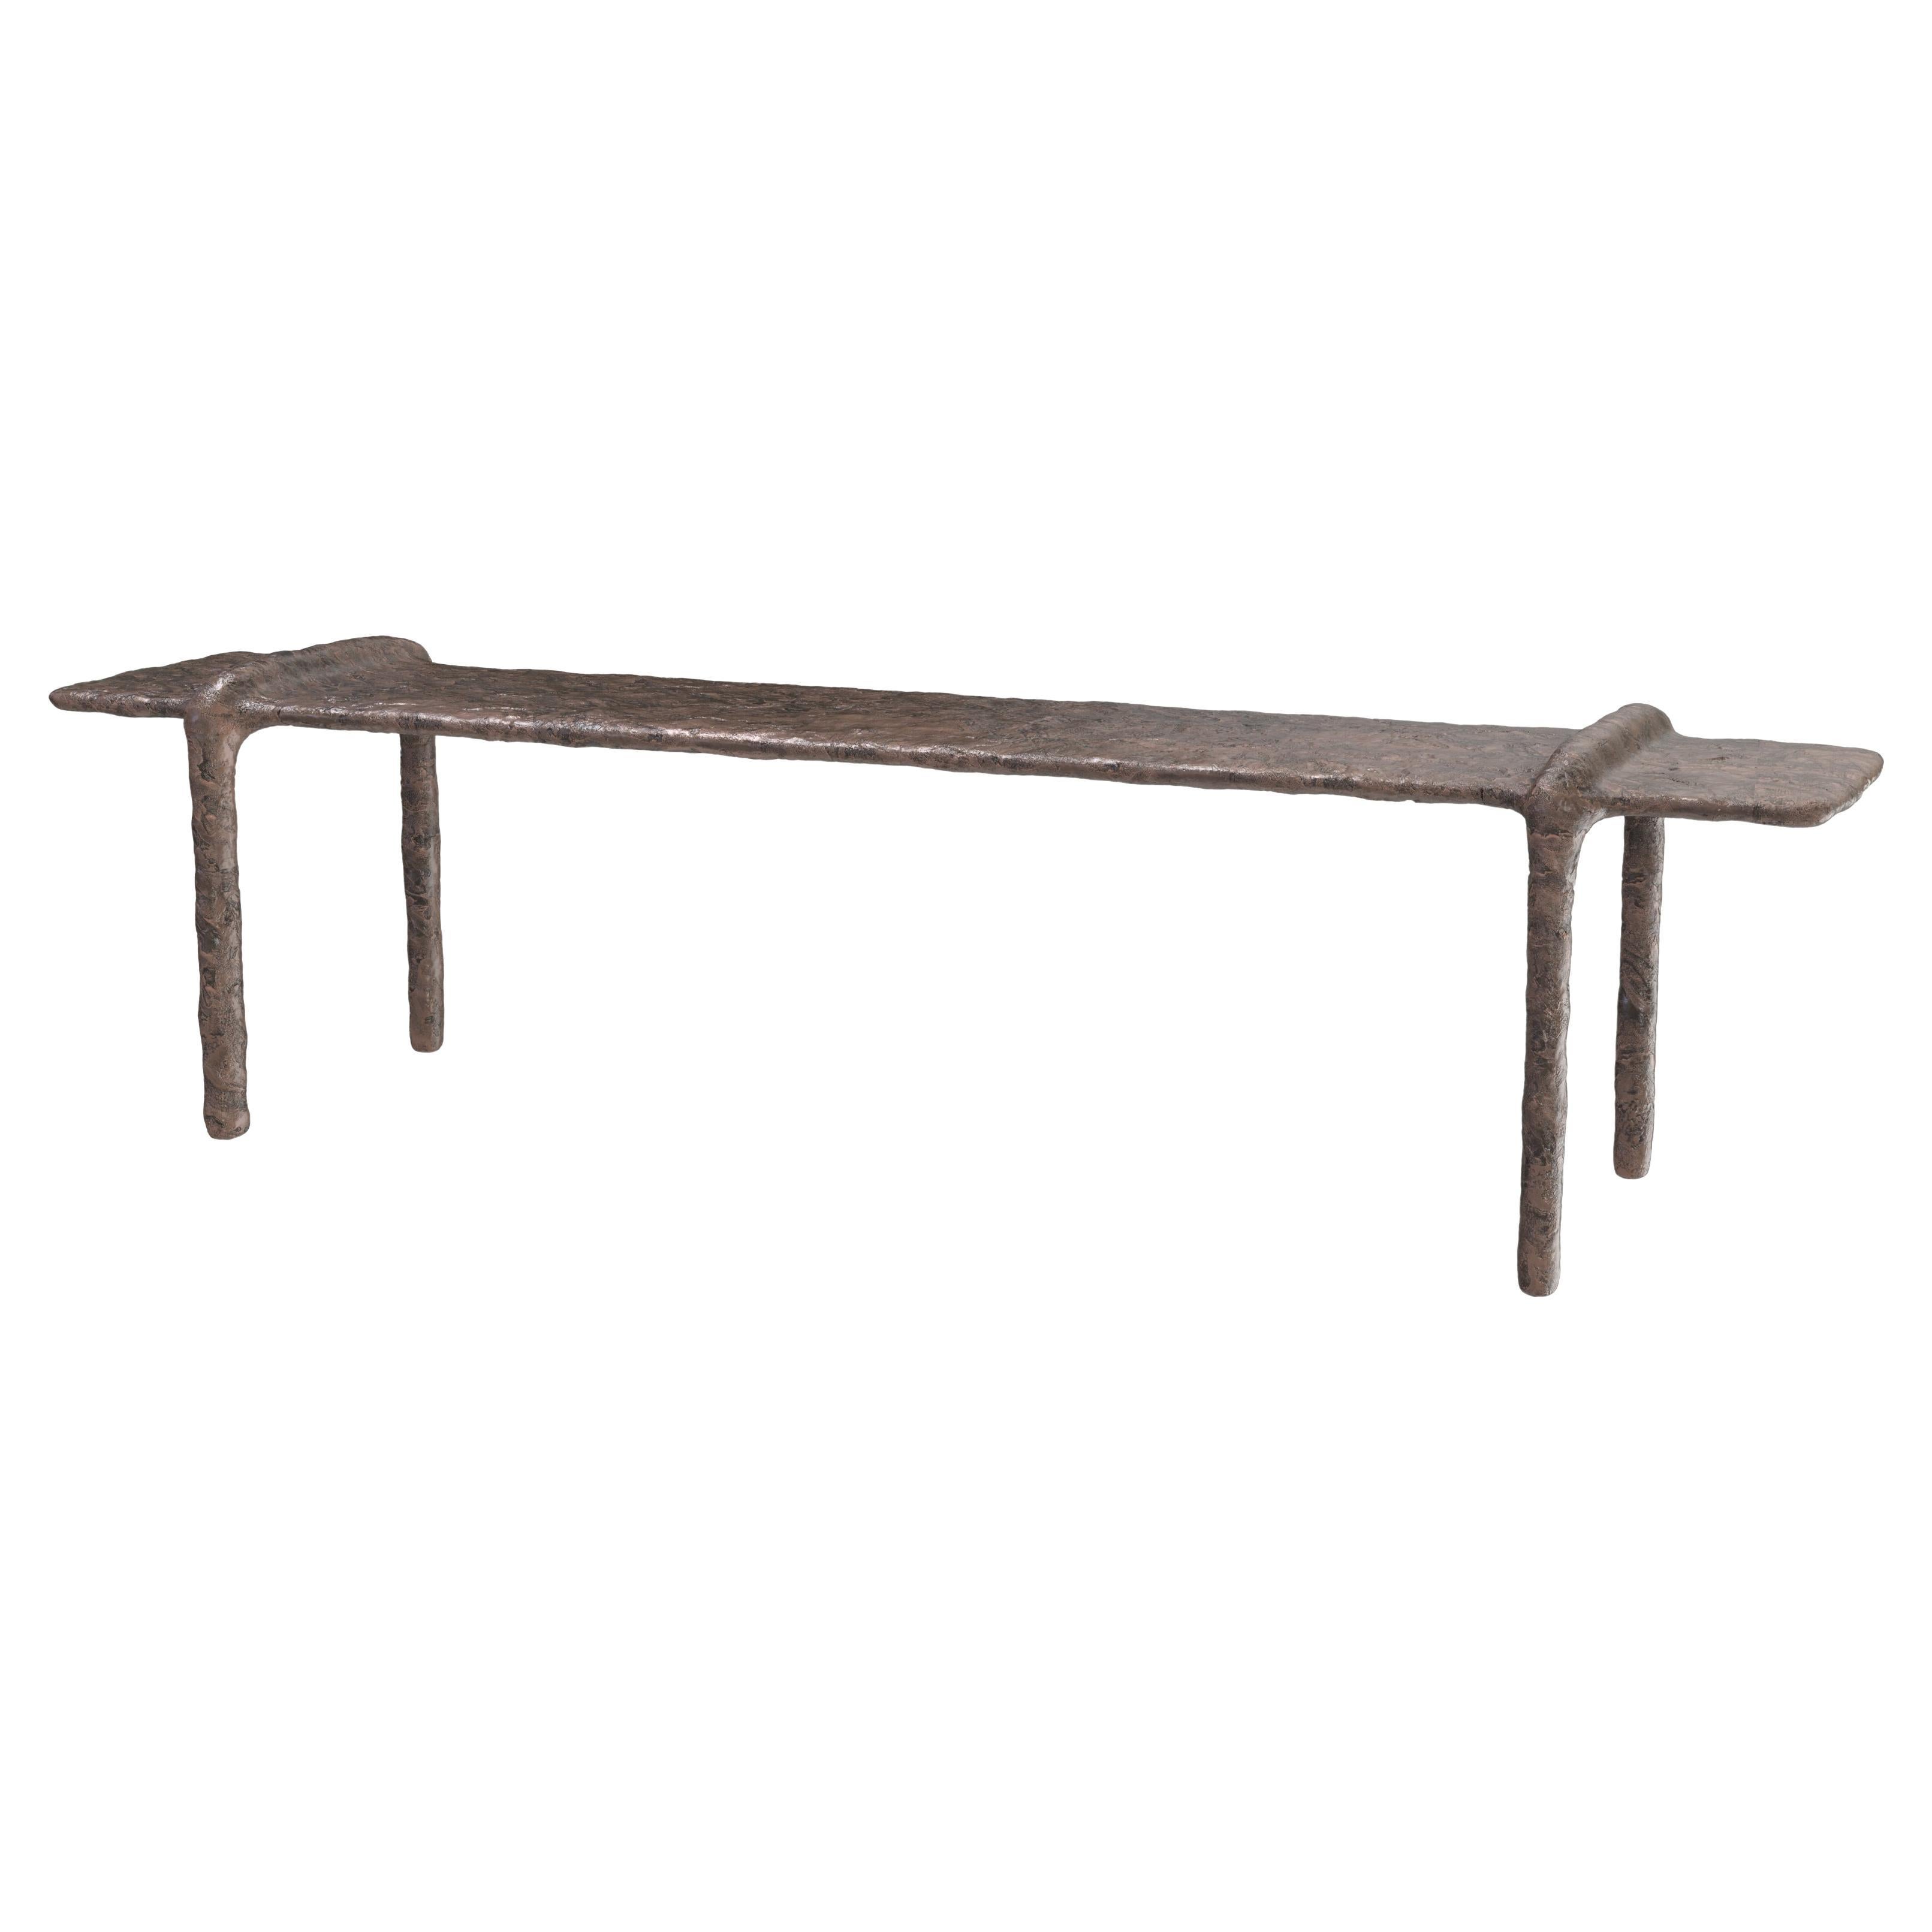 Contemporary Limited Edition Bronze Low Table, Ala V2 by Edizione Limitata For Sale